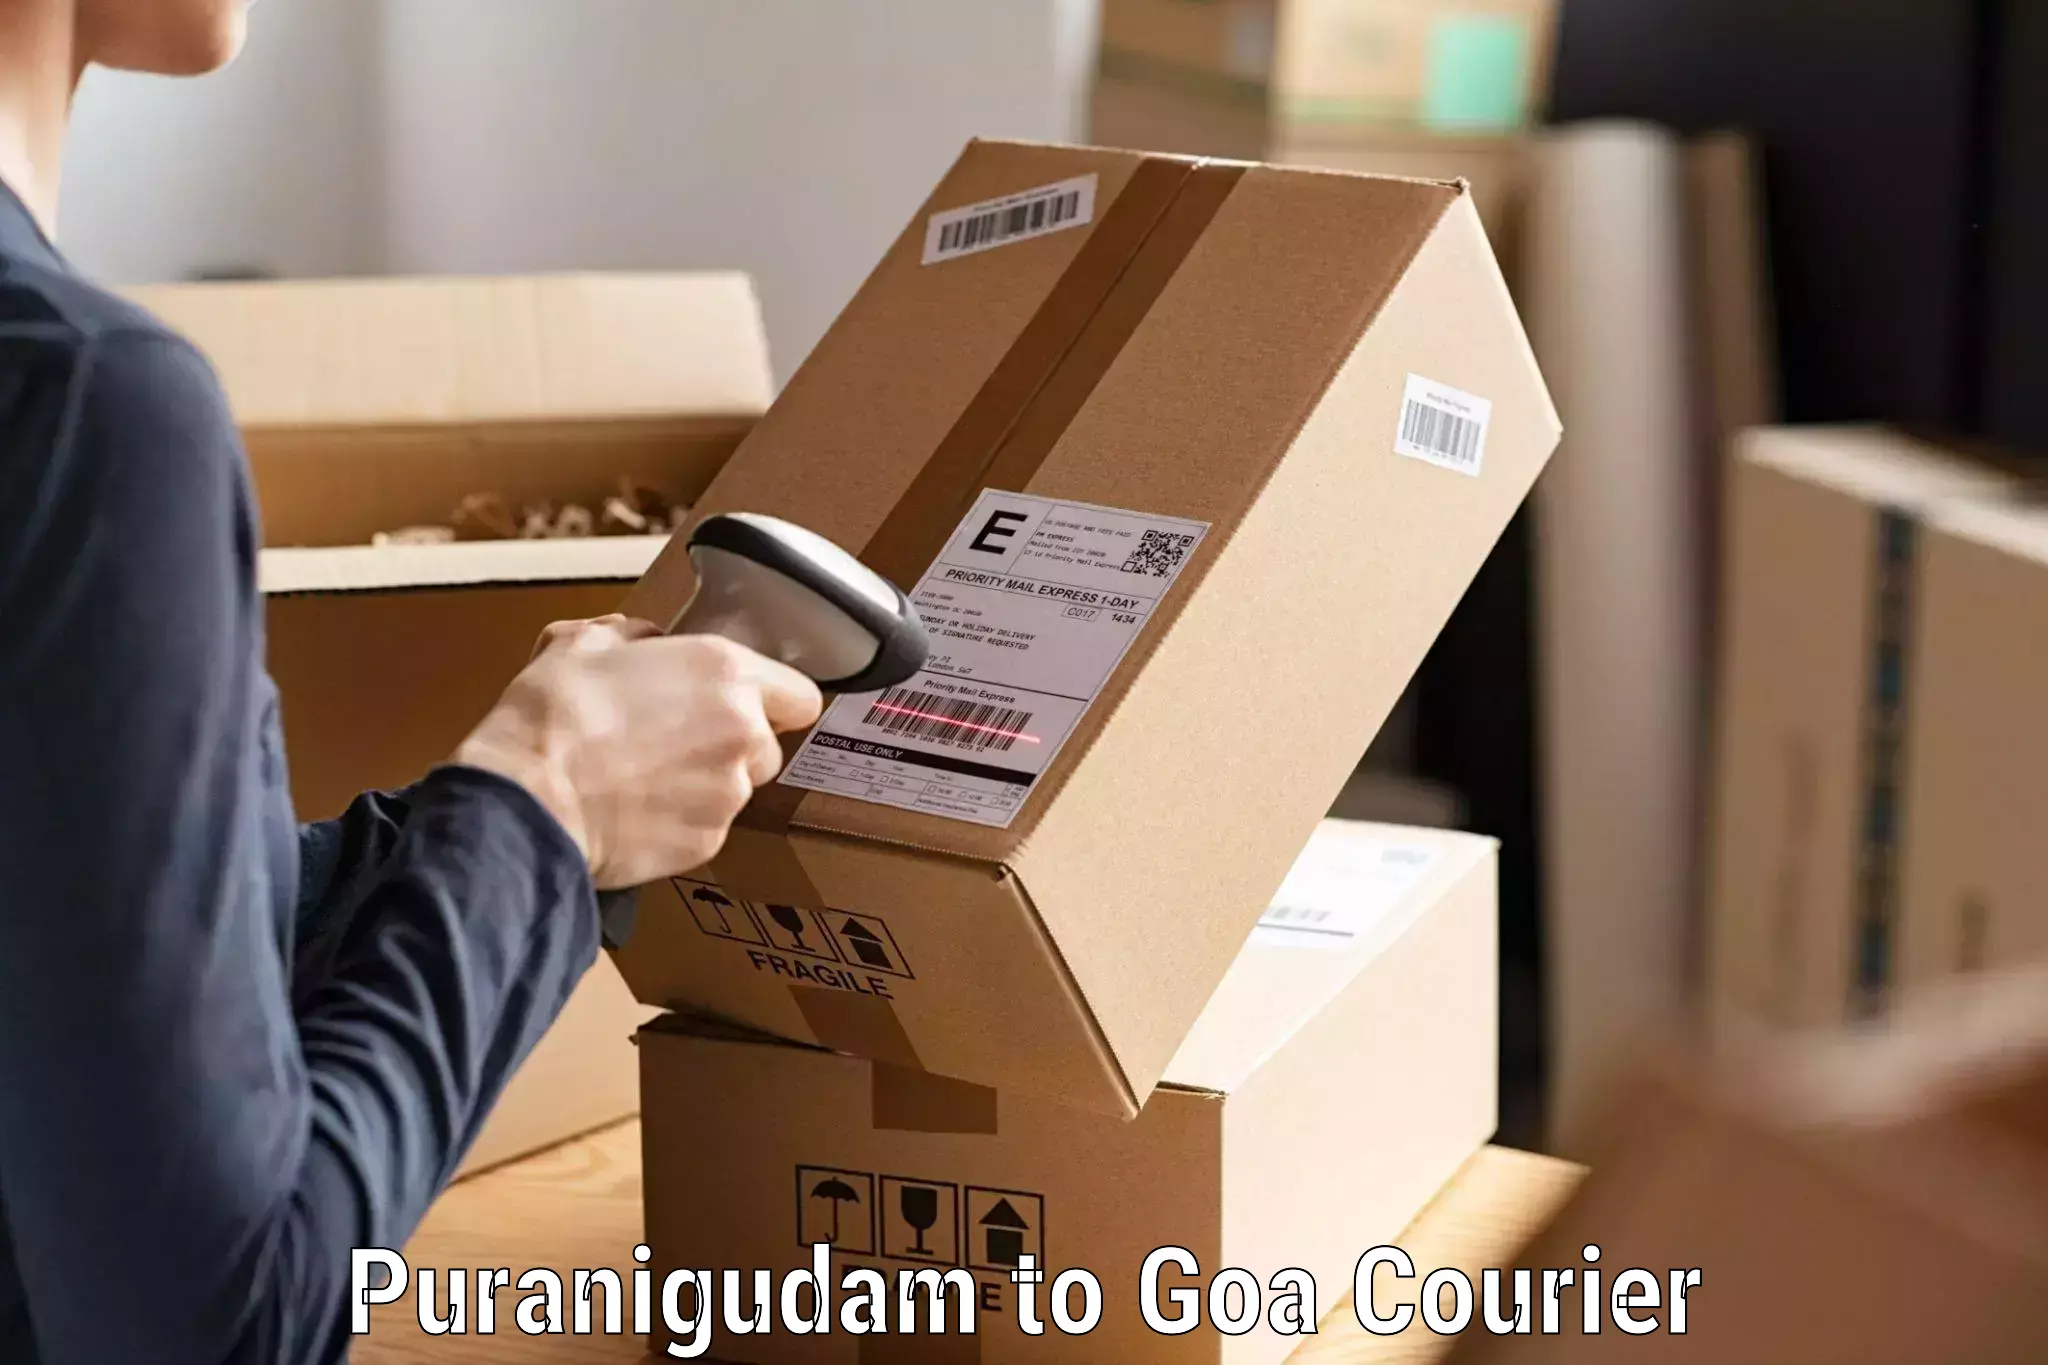 Customer-centric shipping Puranigudam to Goa